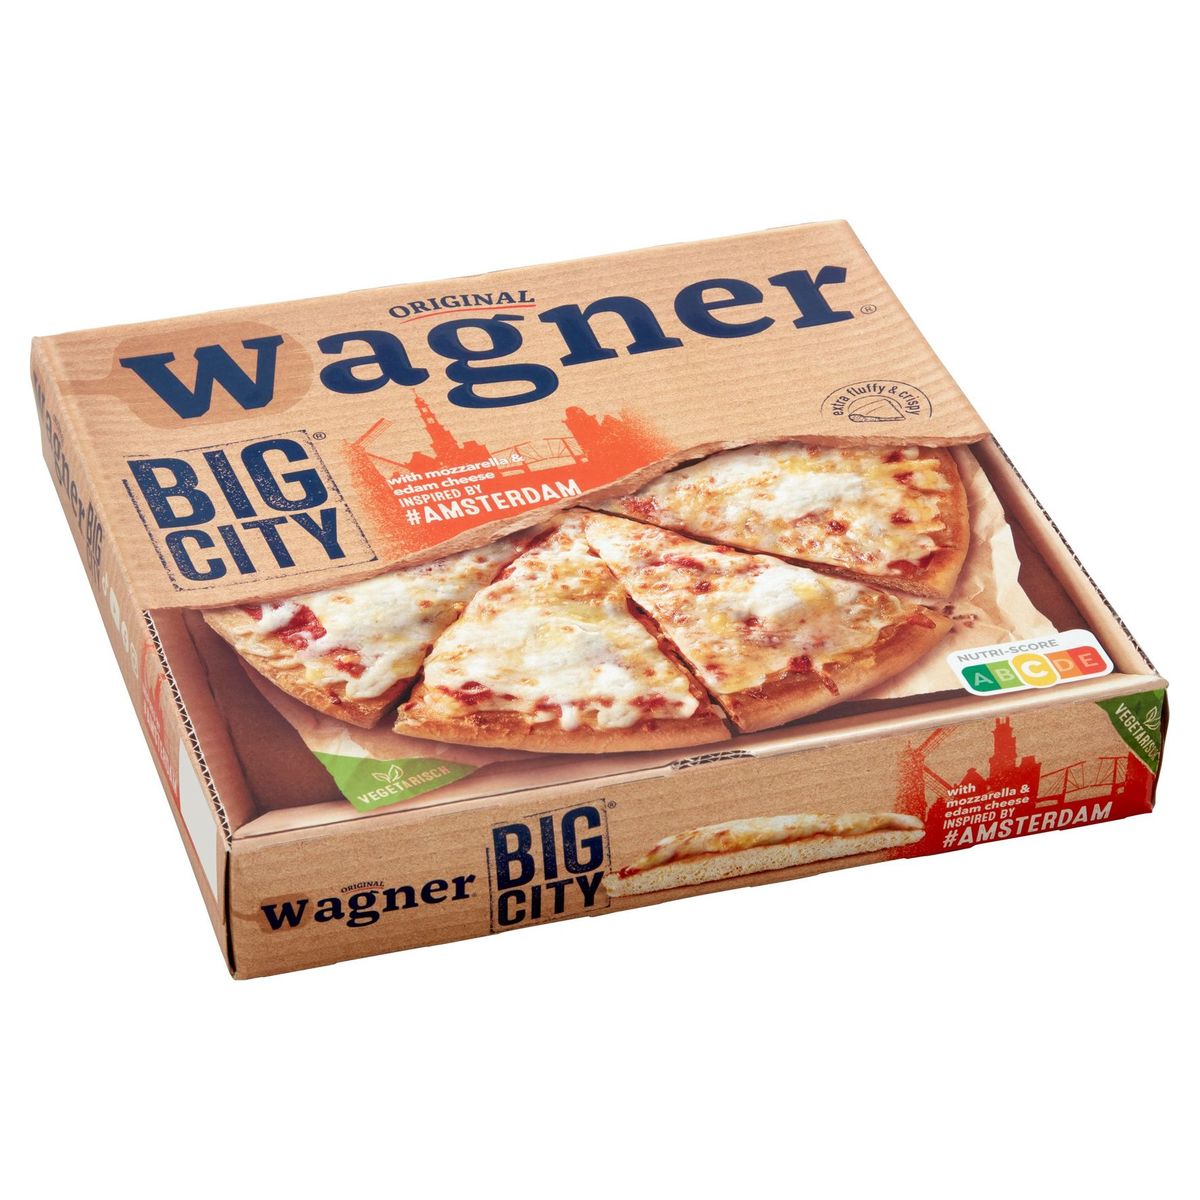 Original Wagner BIG city pizza amsterdam 4 soorten kaas 410 g